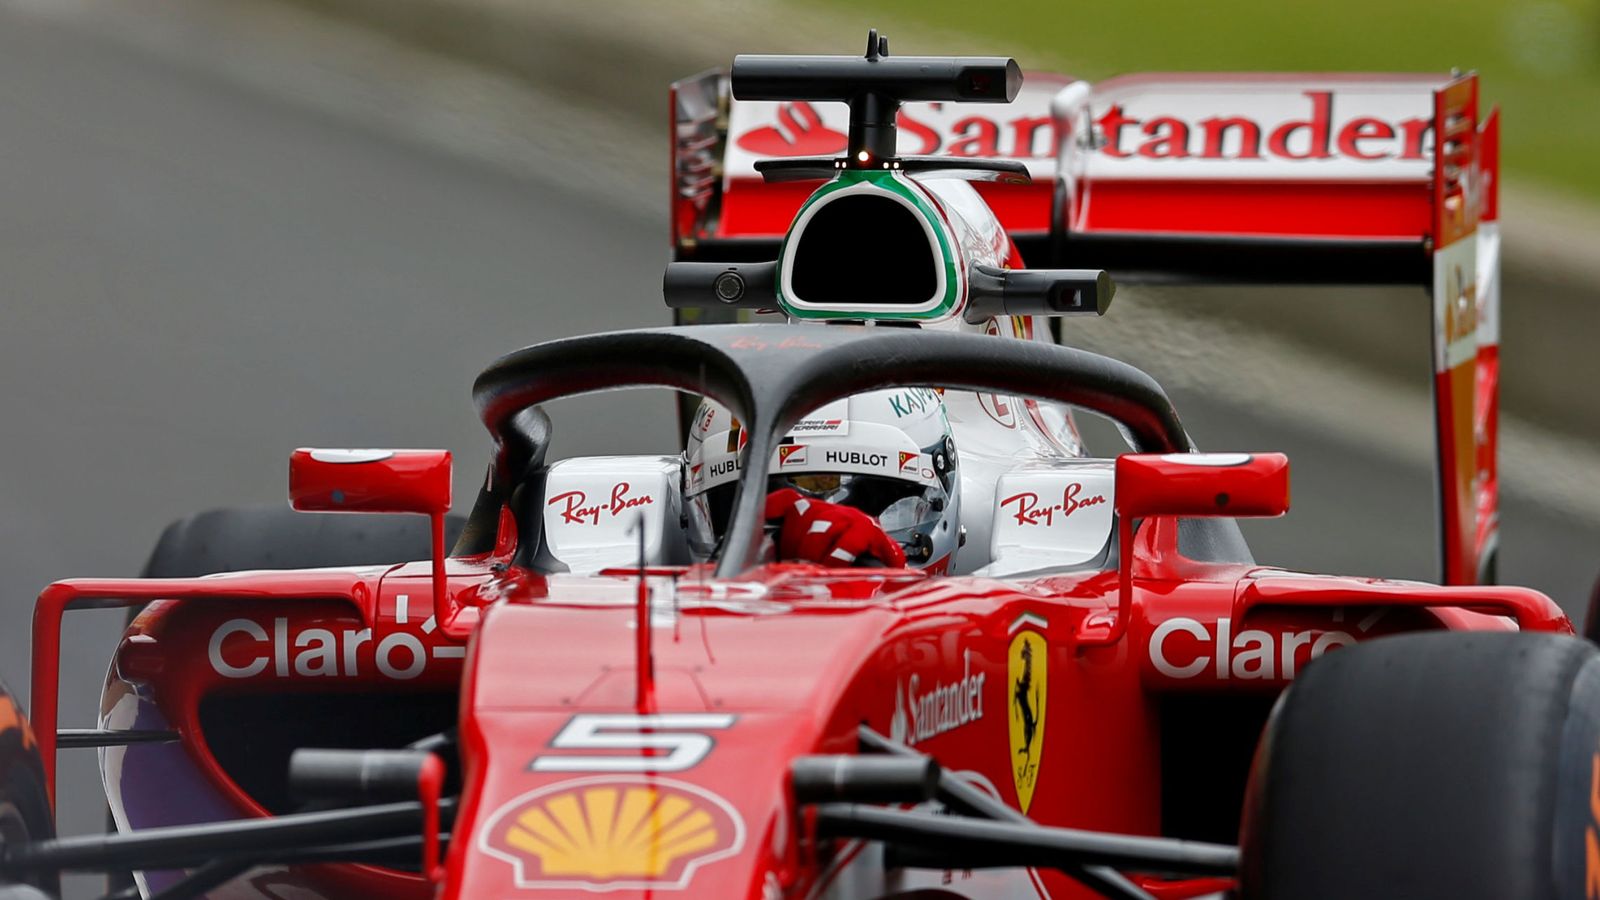 Fórmula 1: Banco Santander abandona la Fórmula 1 al romper el patrocinio  con Ferrari